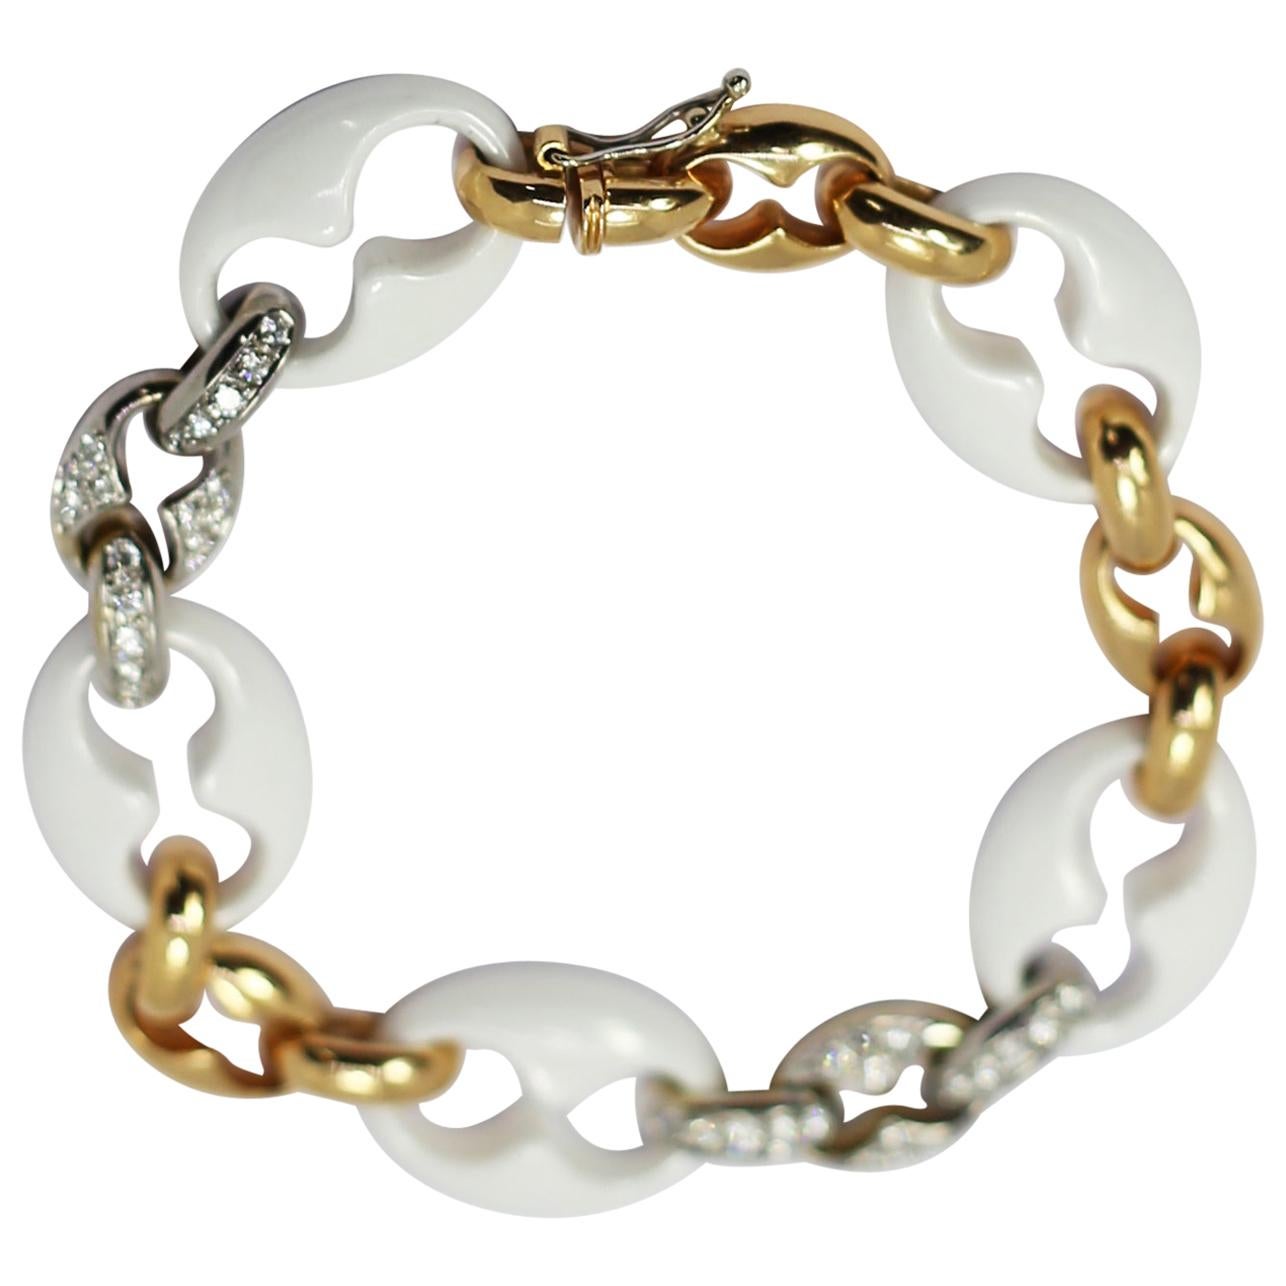 Anchor Chain Bracelet - 4 For Sale on 1stDibs